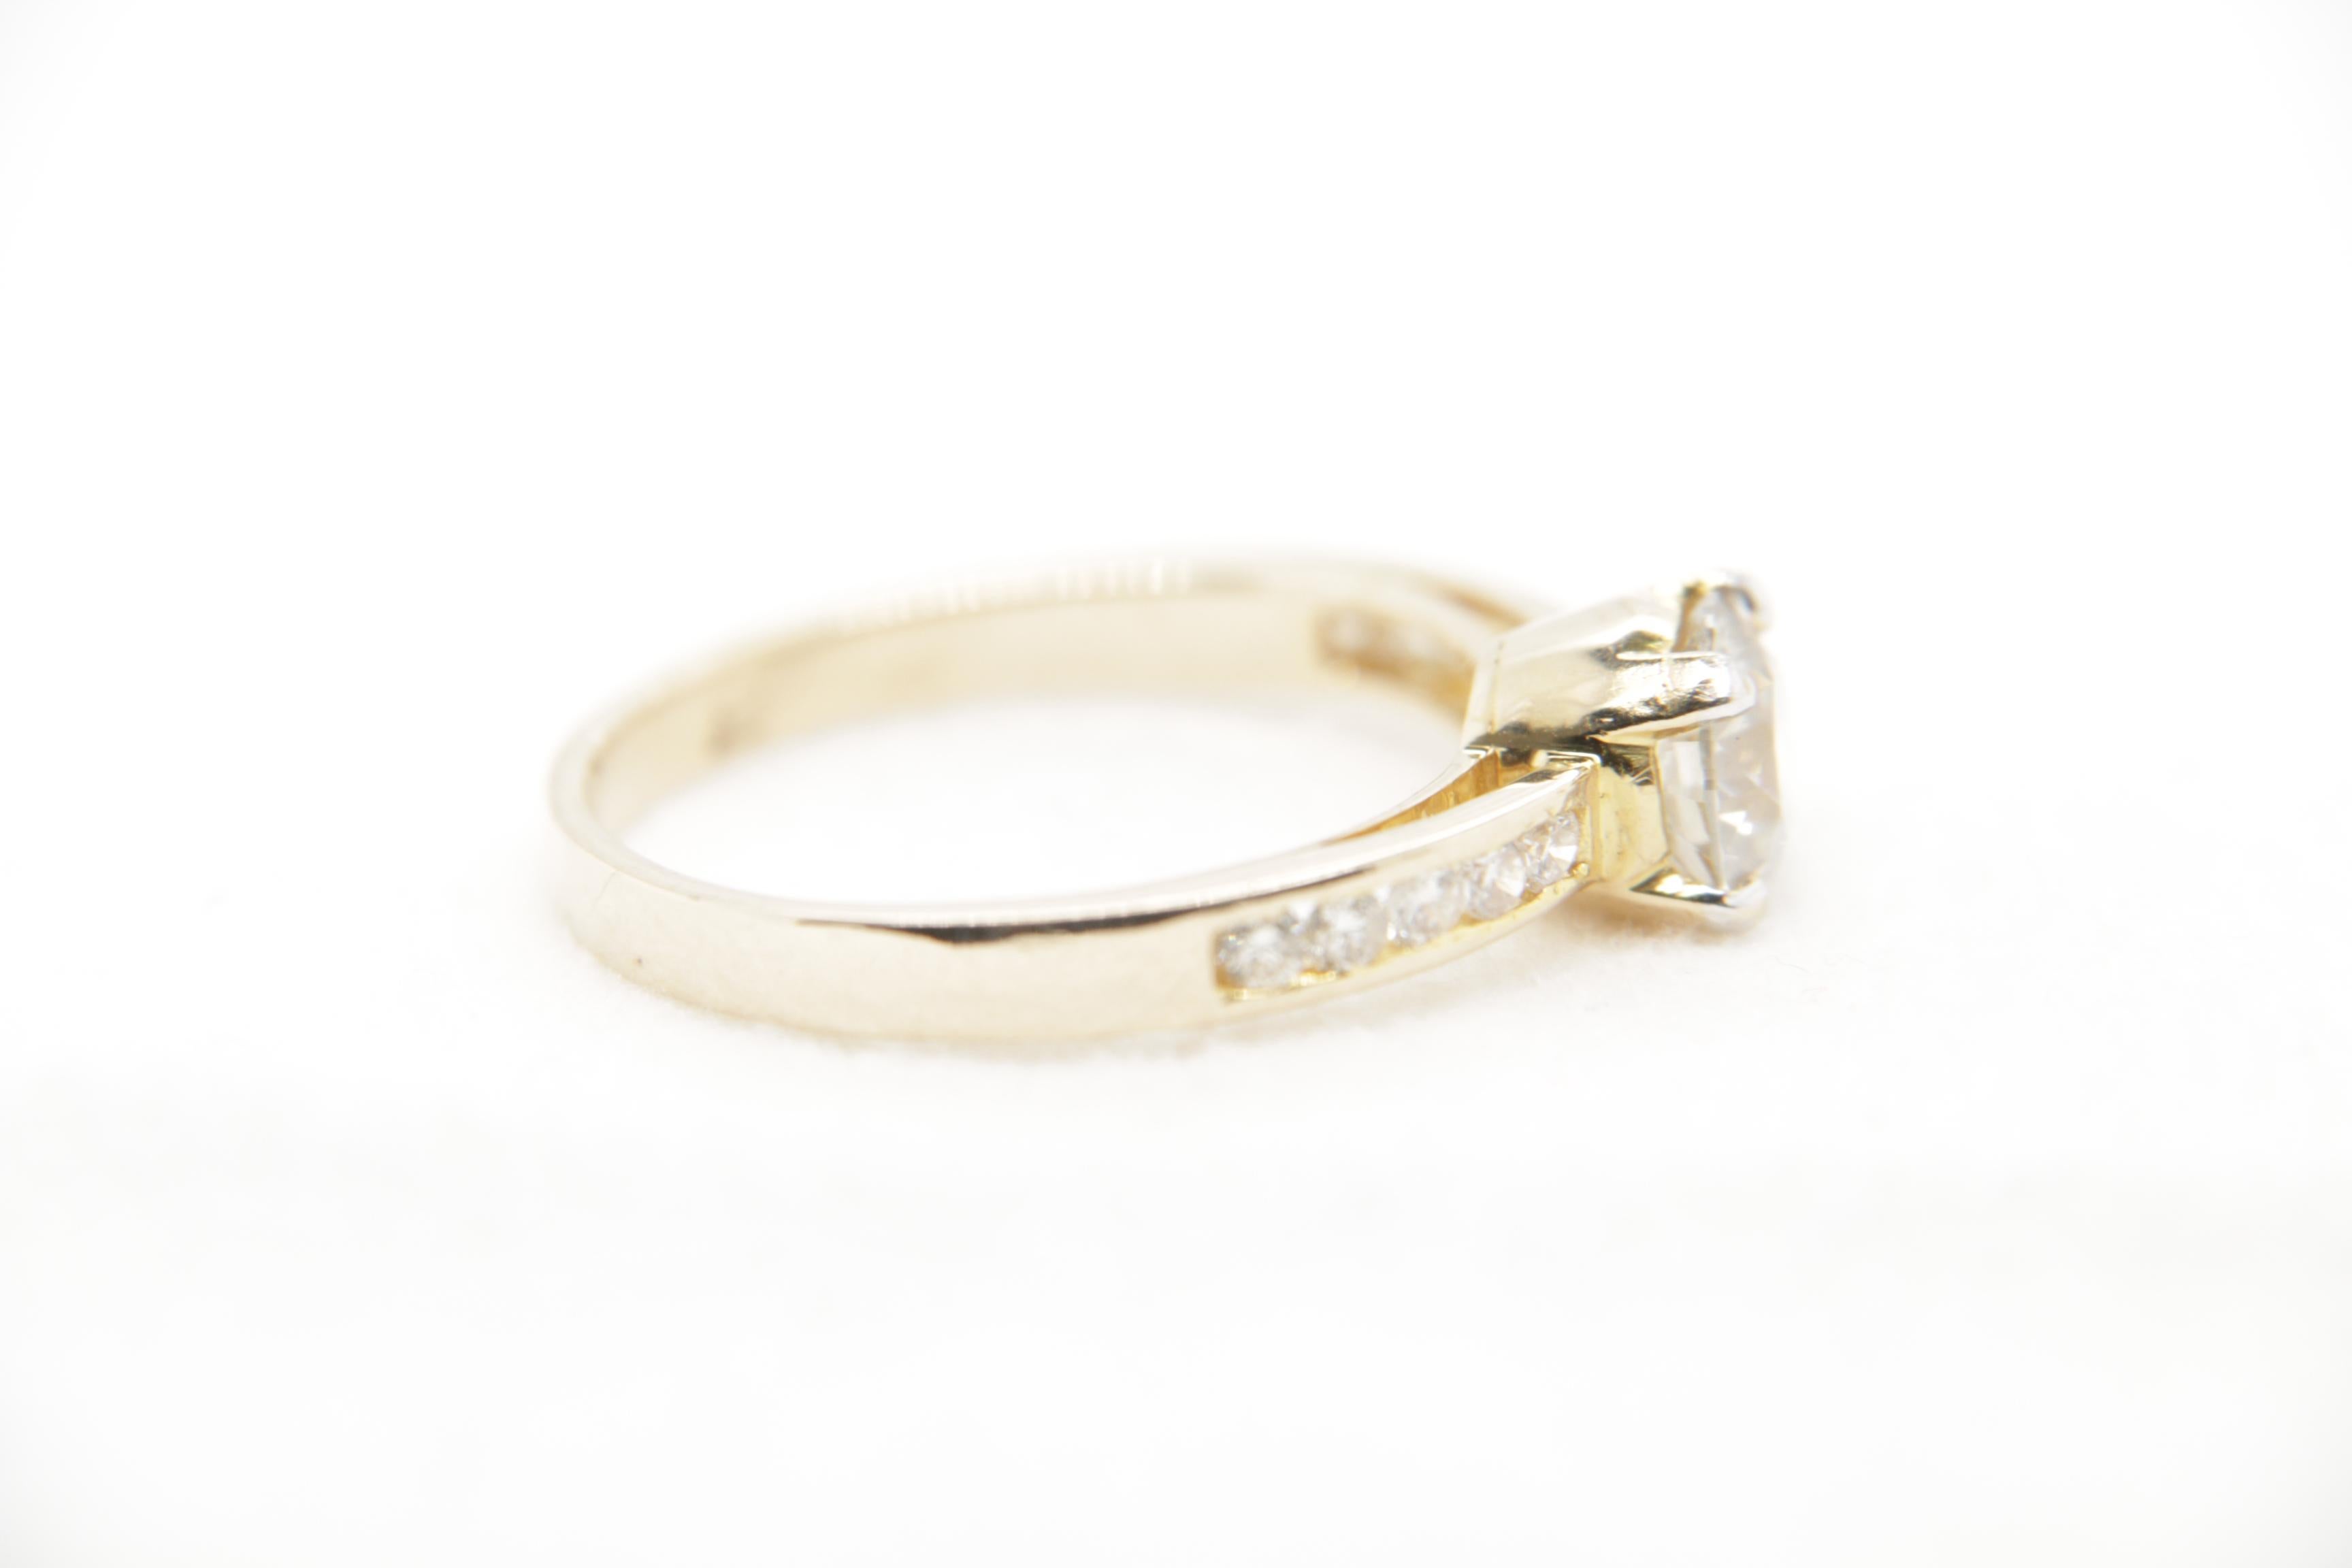 Round Cut 1.01 Carat Diamond Ring in 18 Karat Gold For Sale